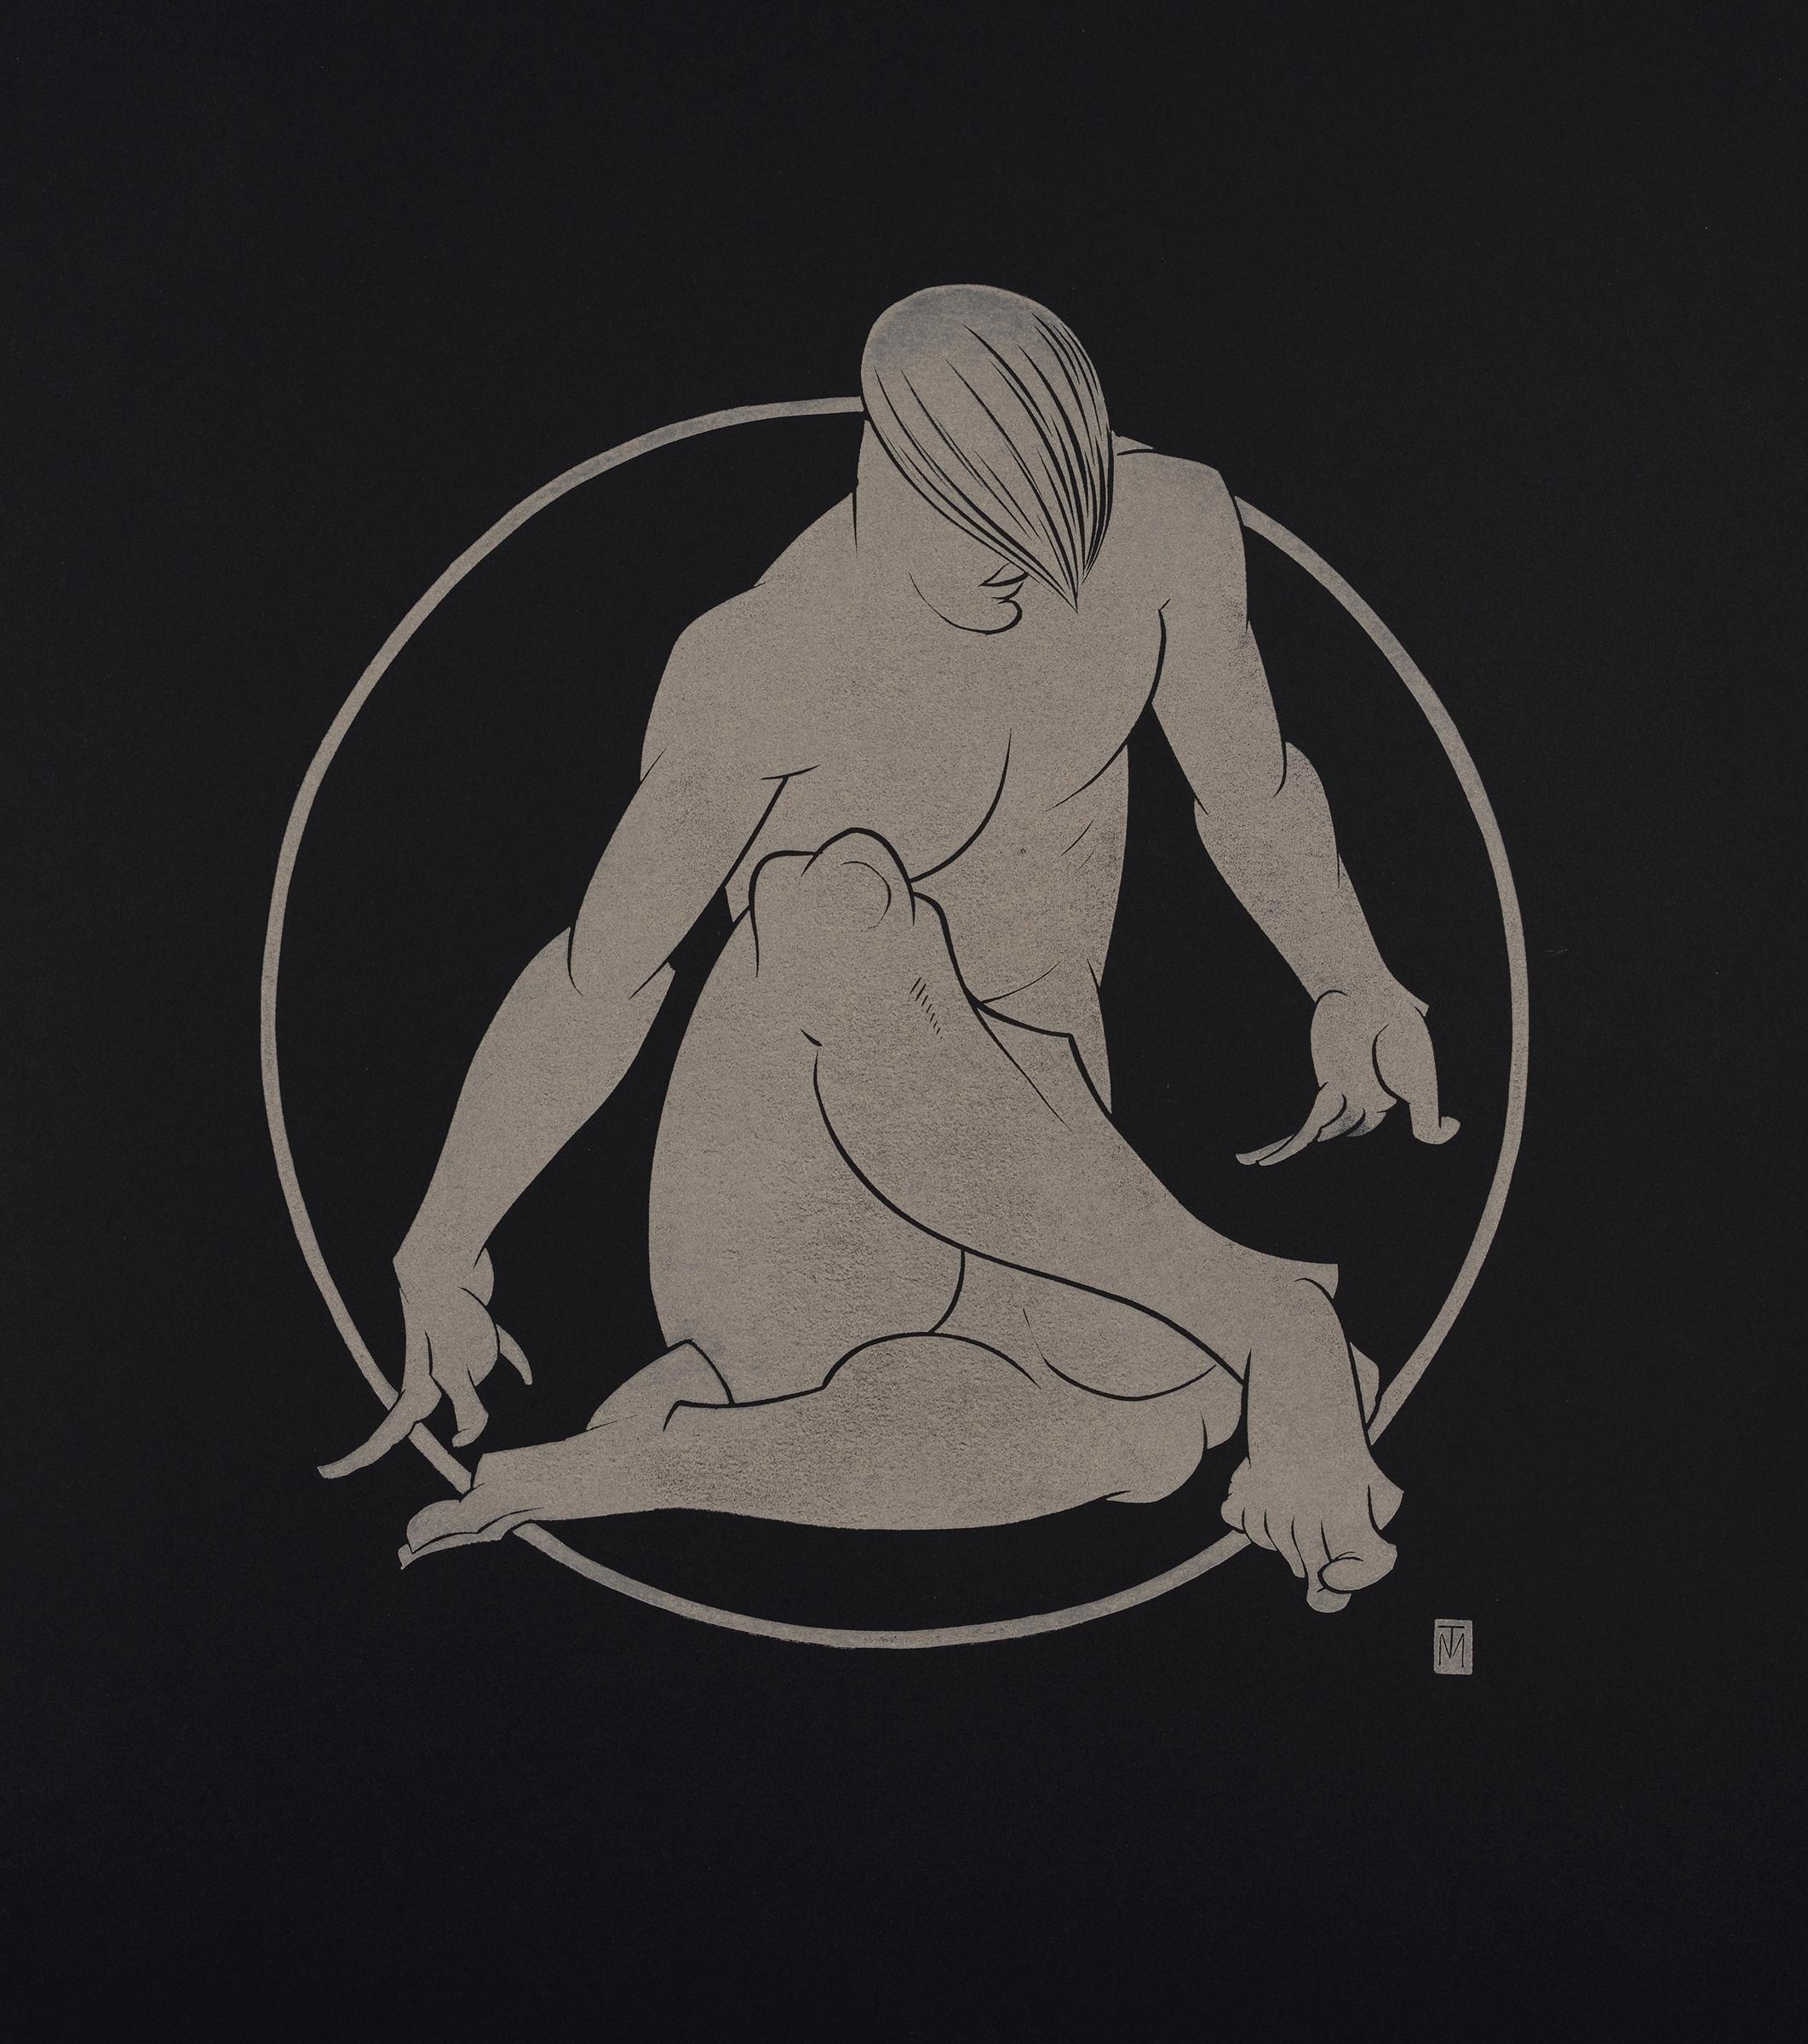 Martyn Tverdun Nude Print - "In The Circle" - gold block print on black paper, male nude